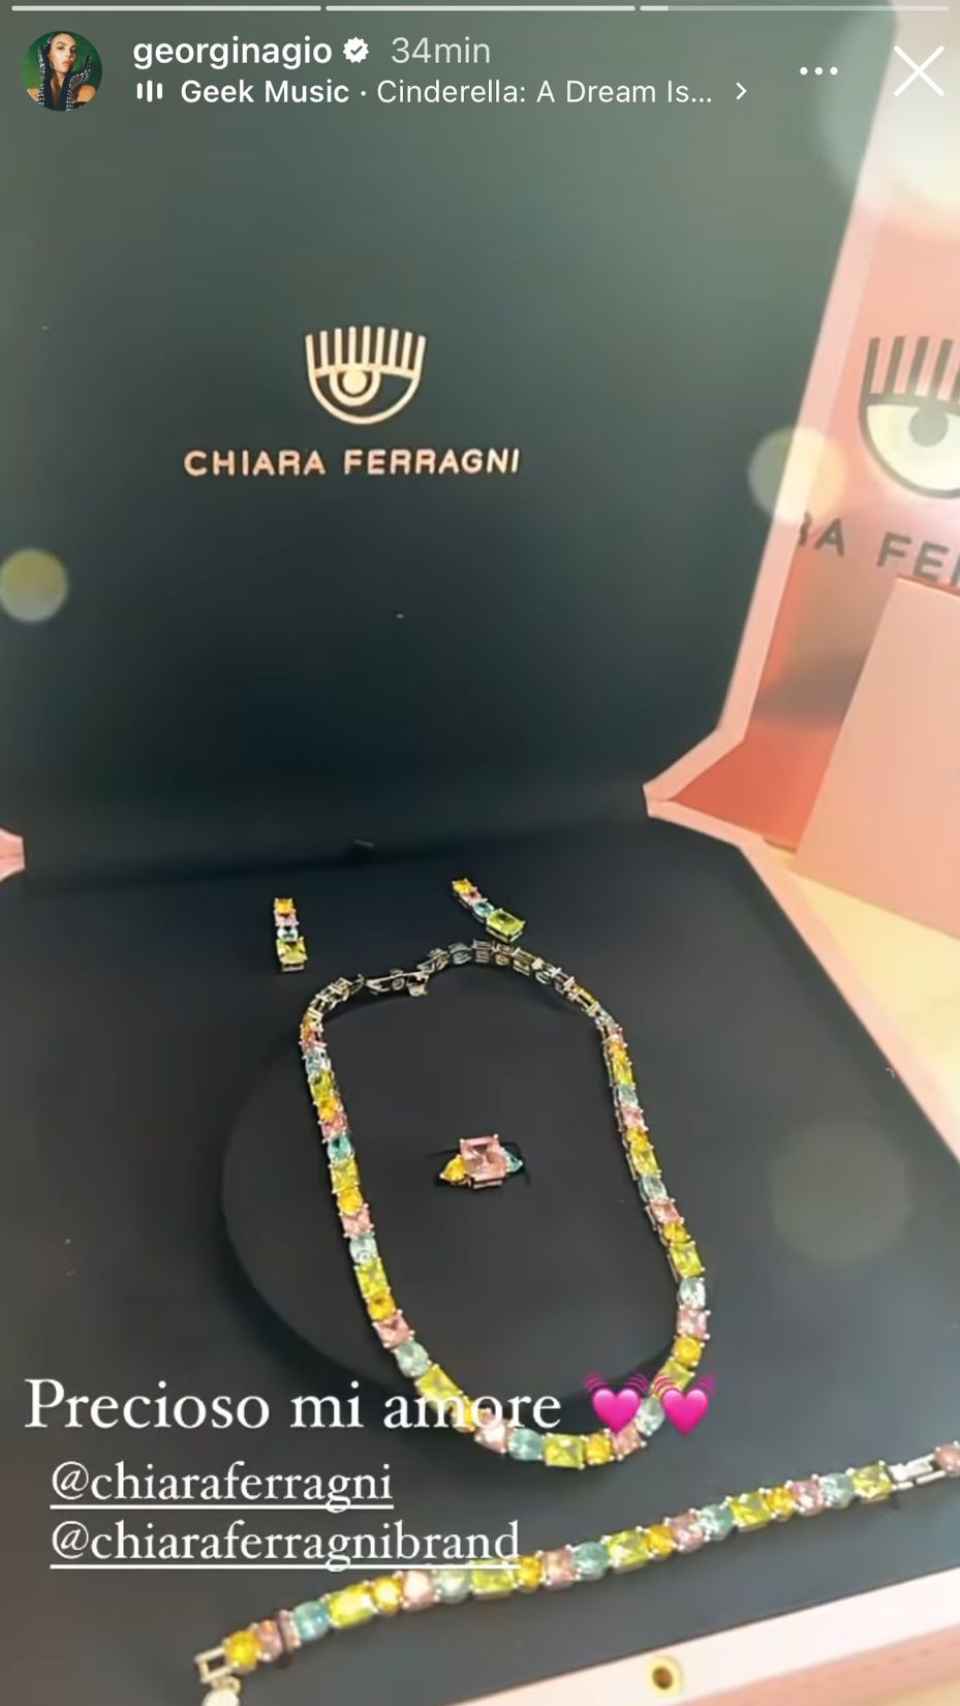 Las joyas que de Chiara Ferragni que ha recibido Georgina Rodríguez.